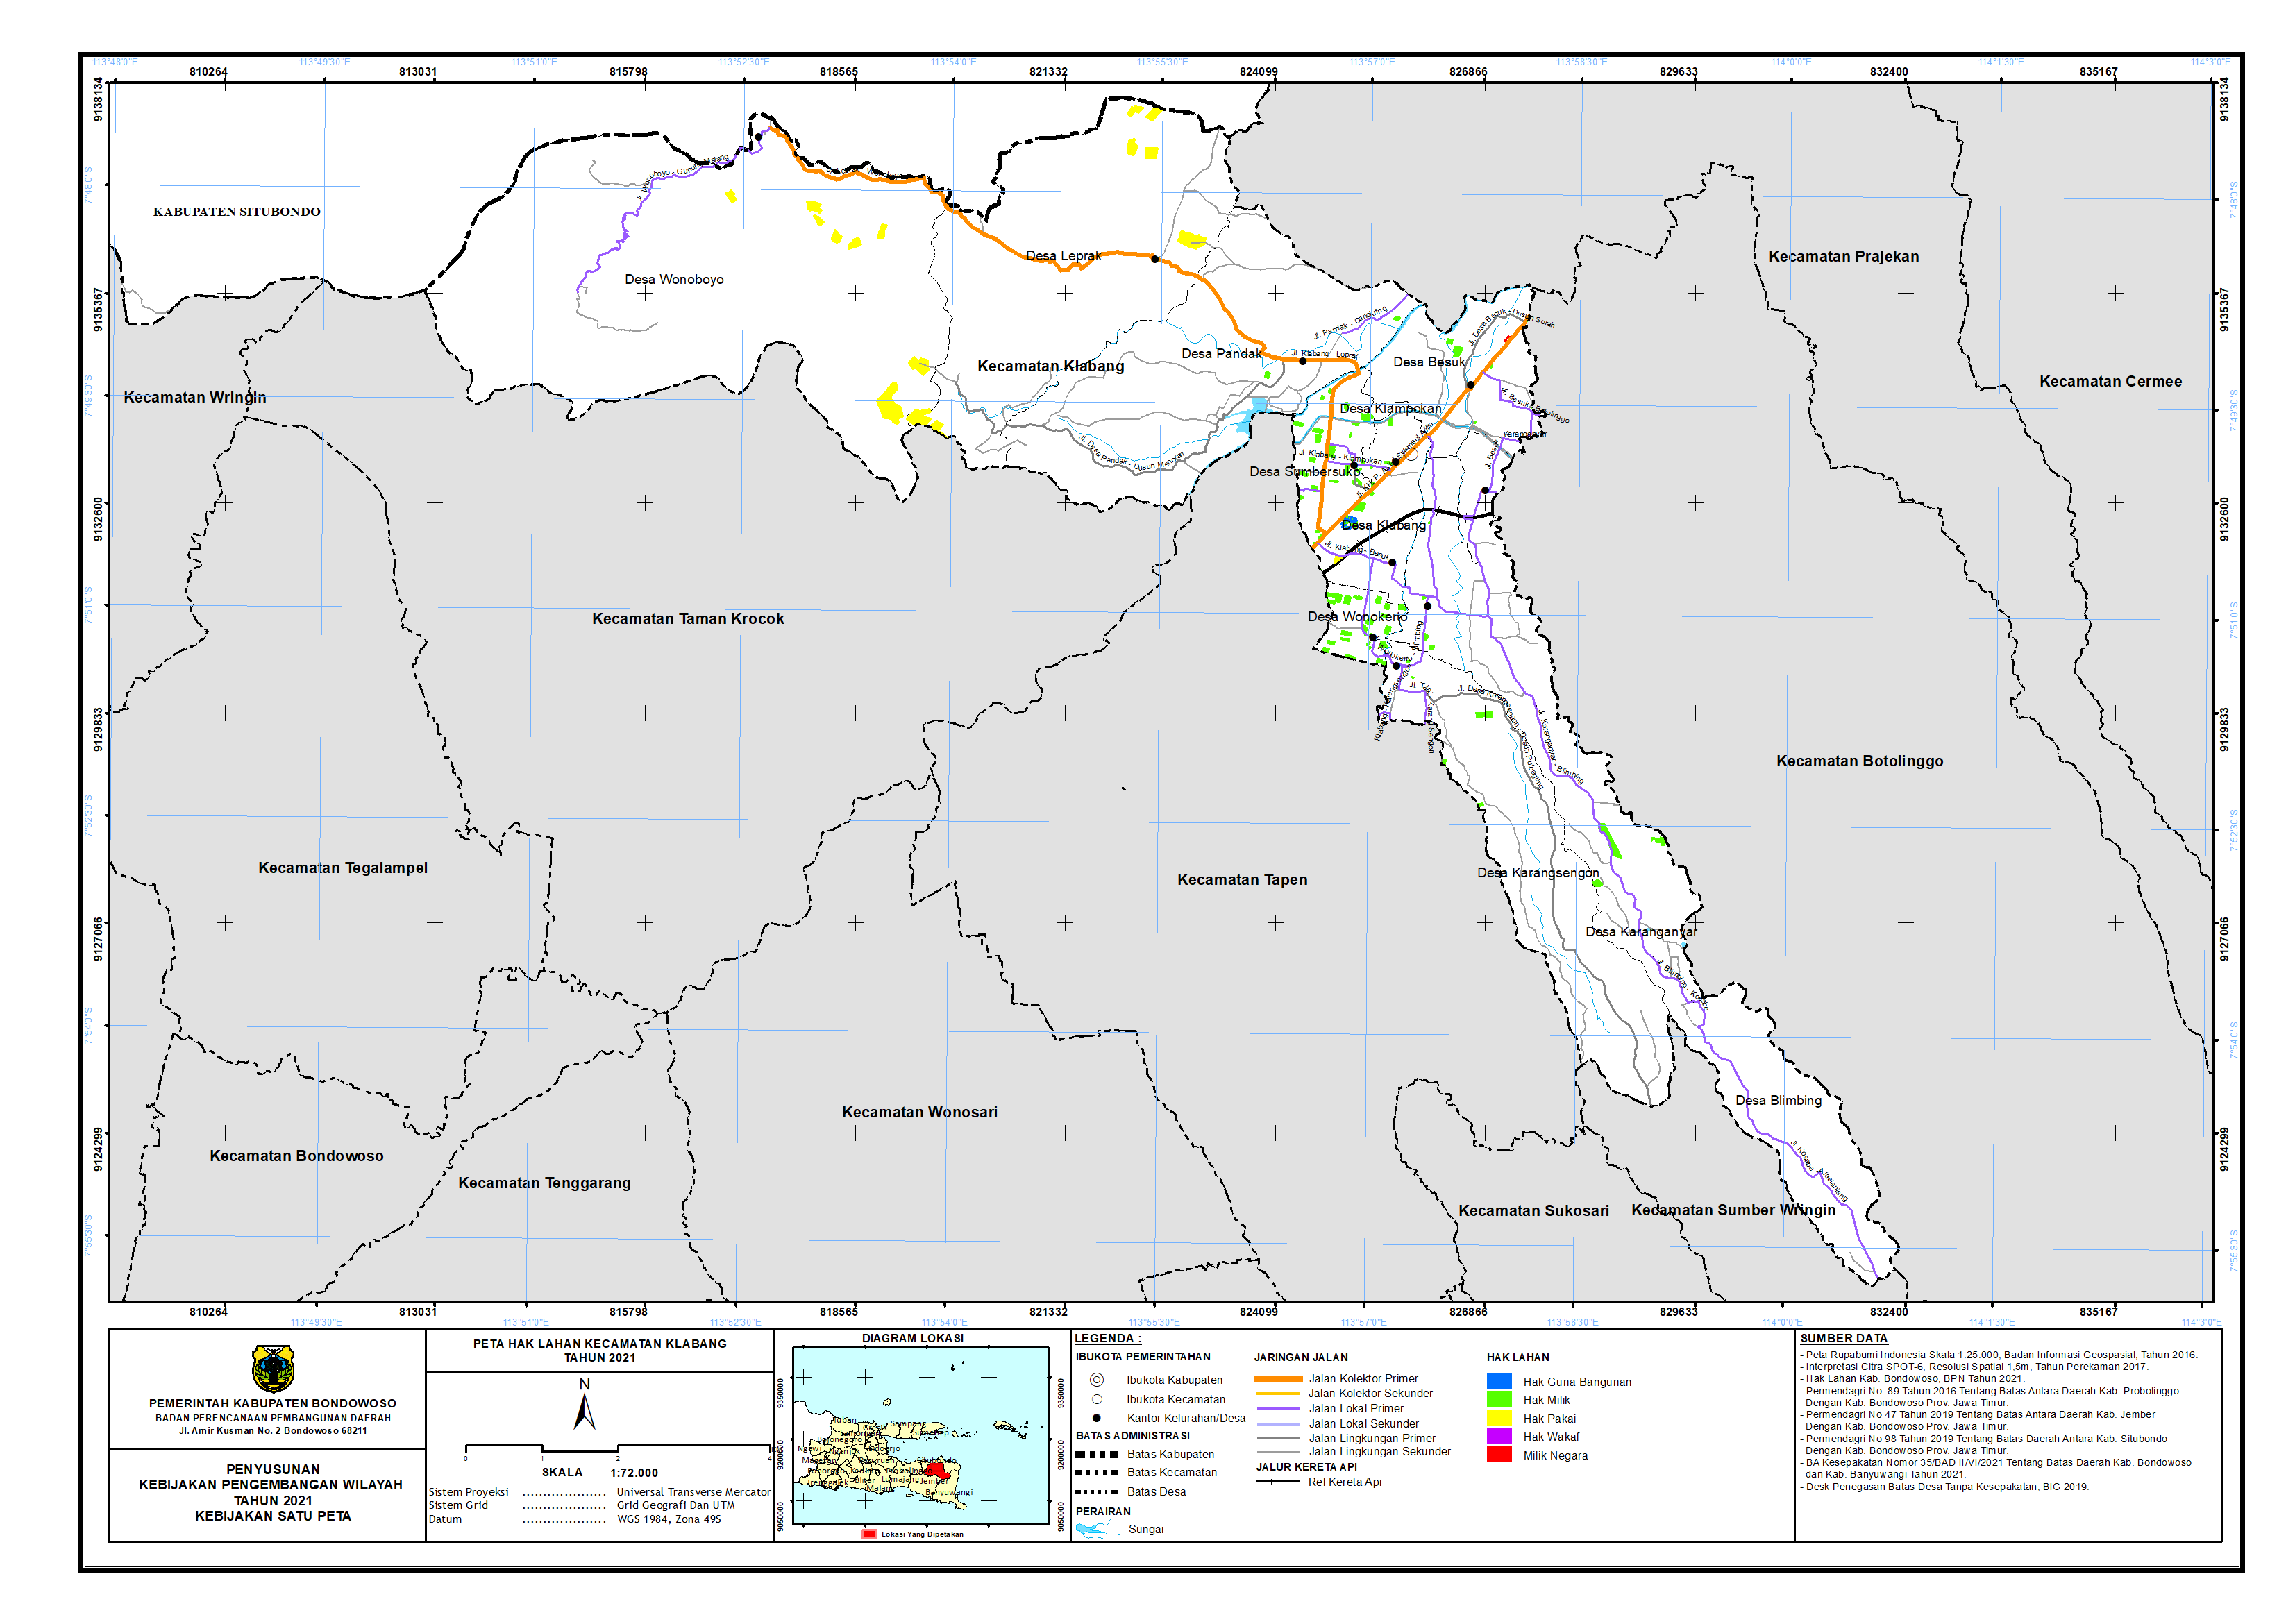 Peta Hak Lahan Kecamatan Klabang.png